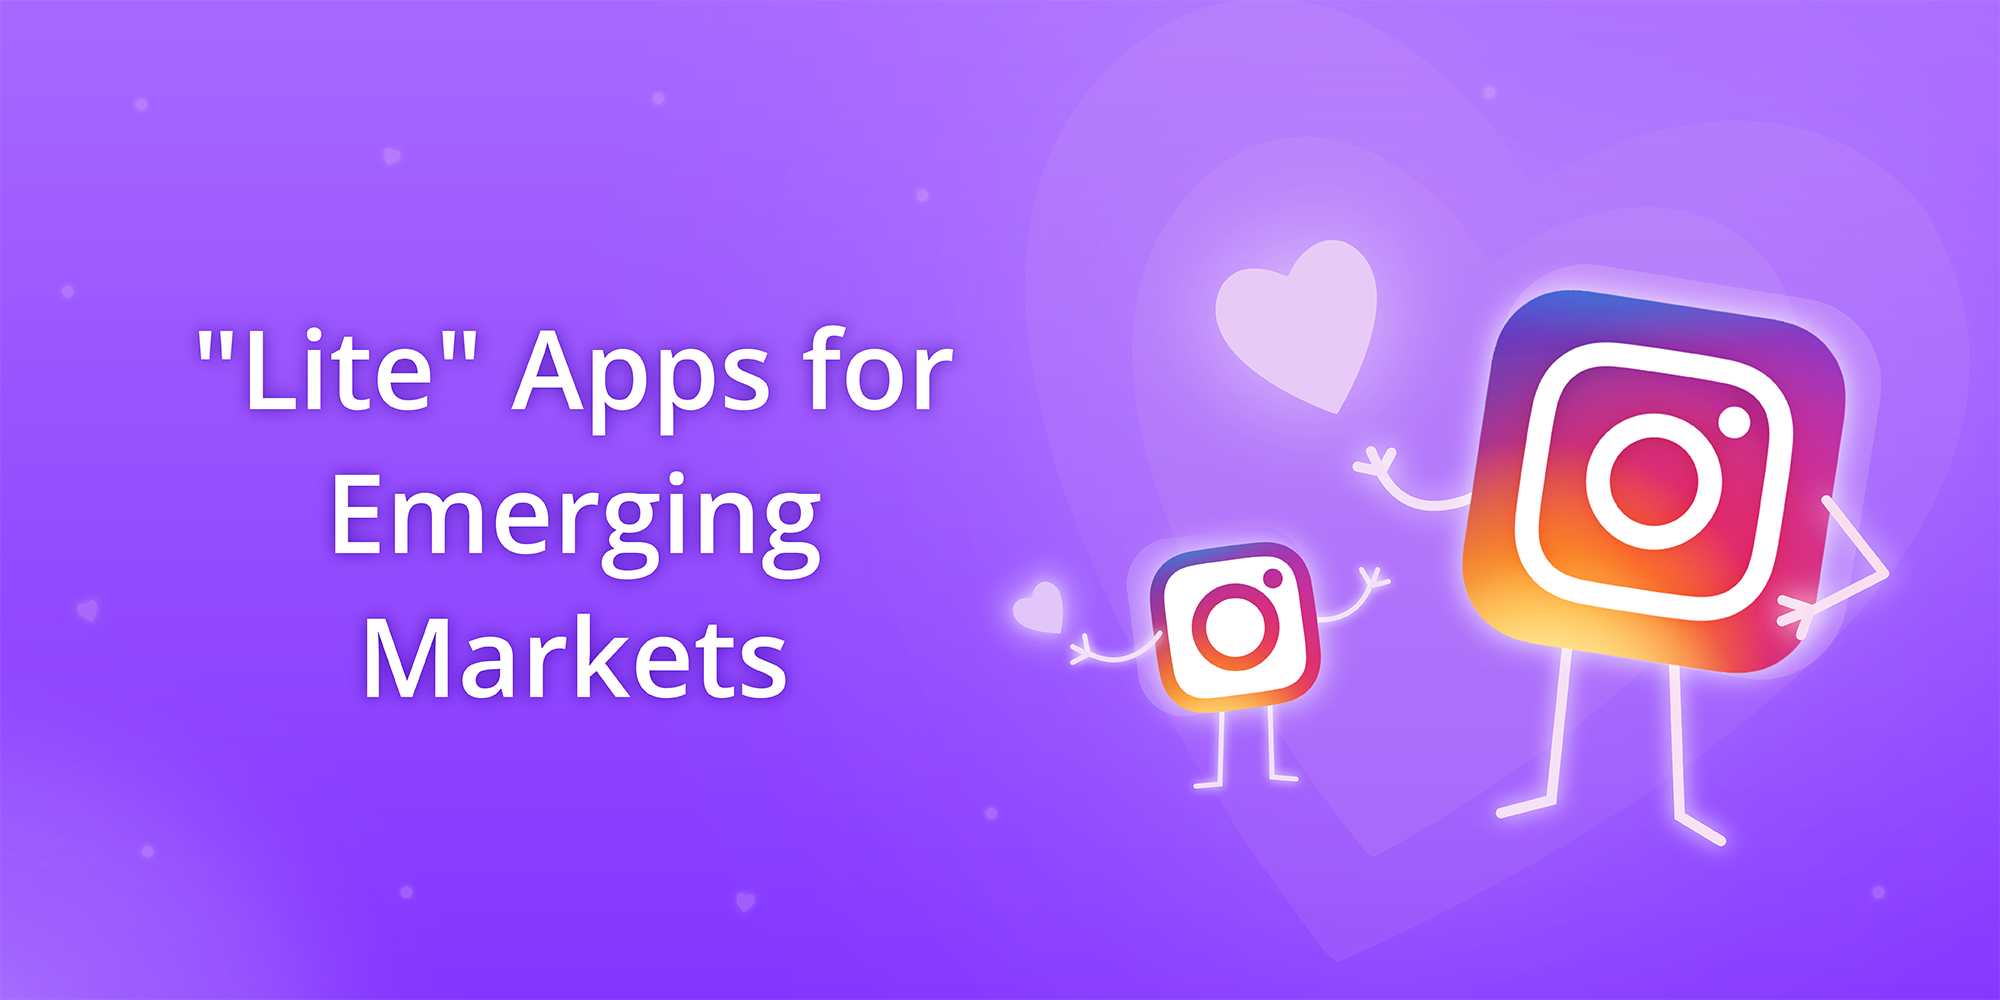 "Lite" Apps for Emerging Markets